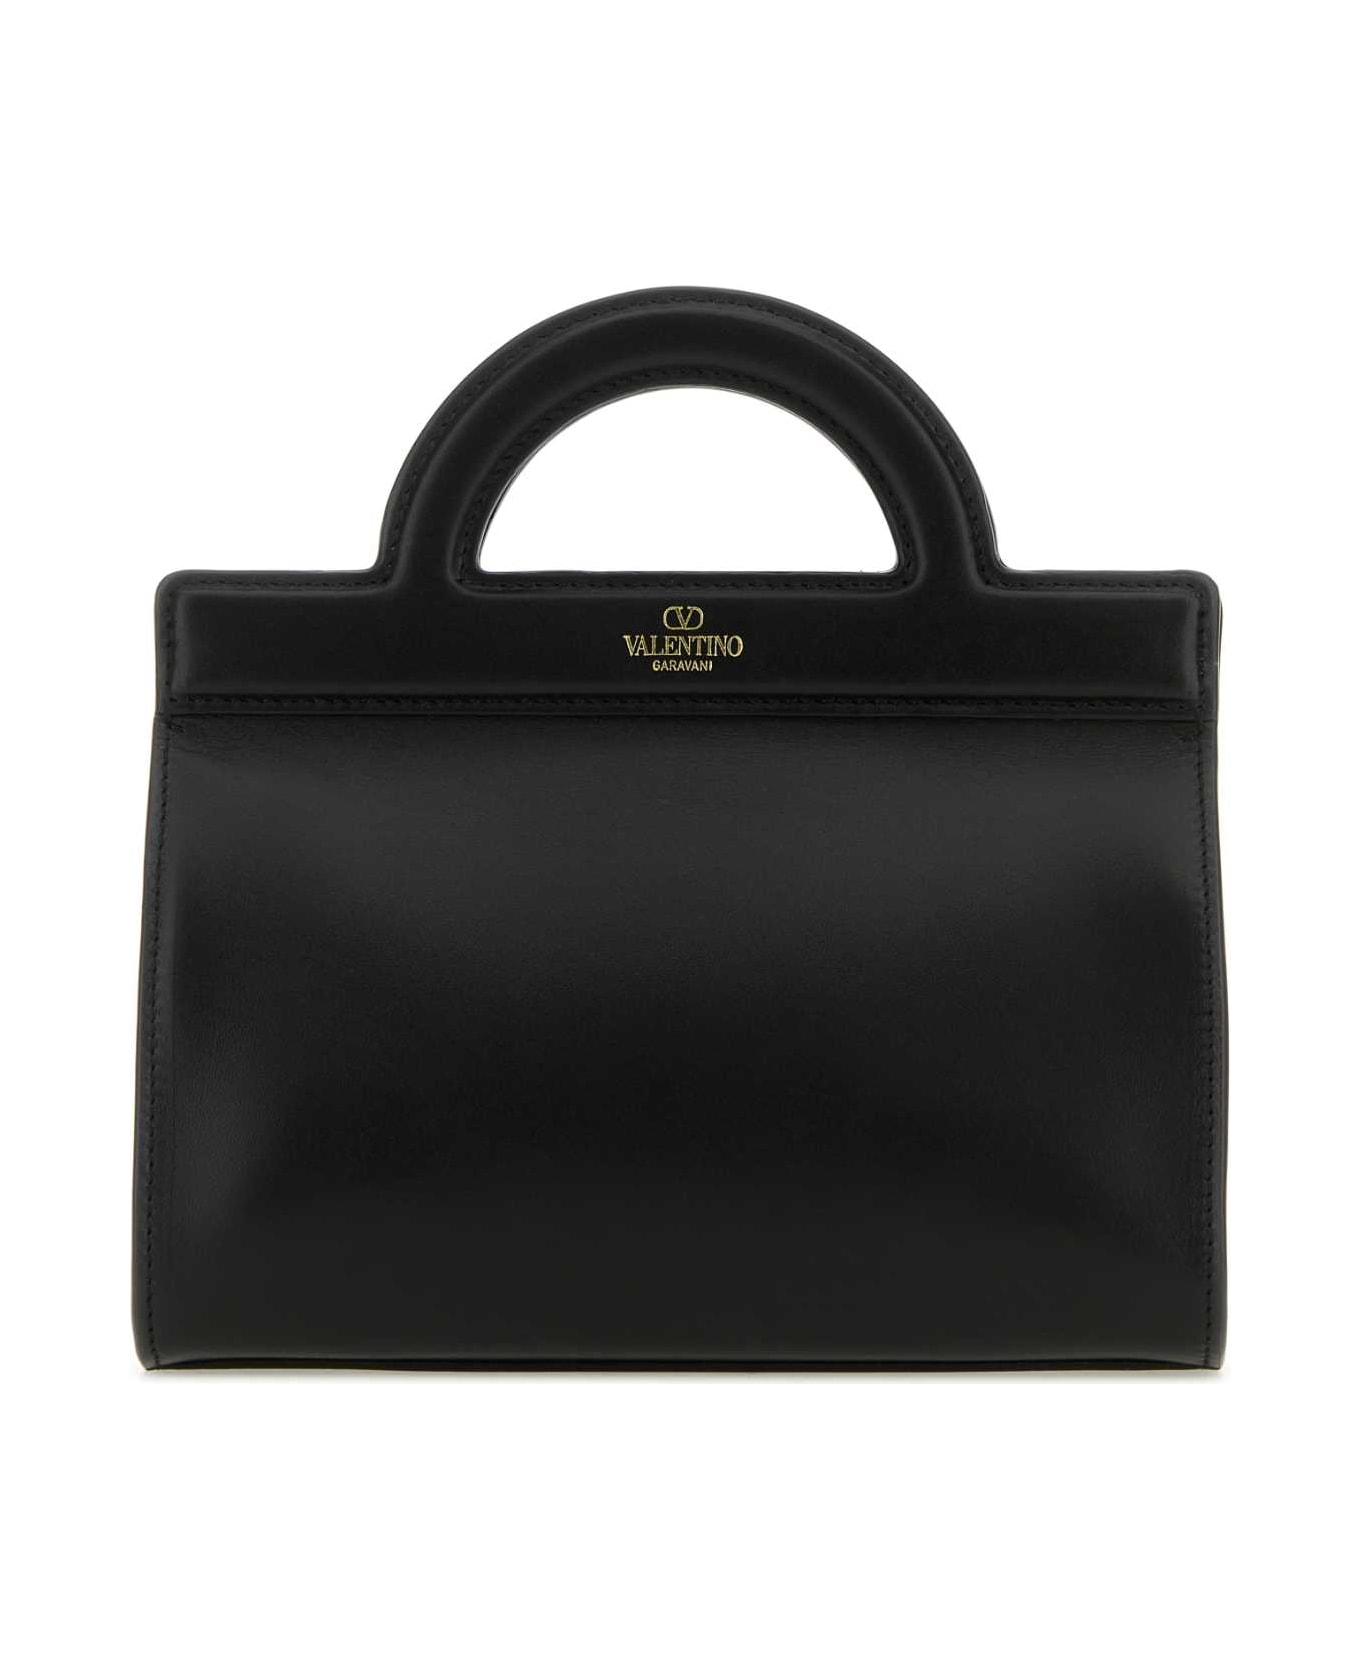 Valentino Garavani Black Leather Handbag - NERO トートバッグ